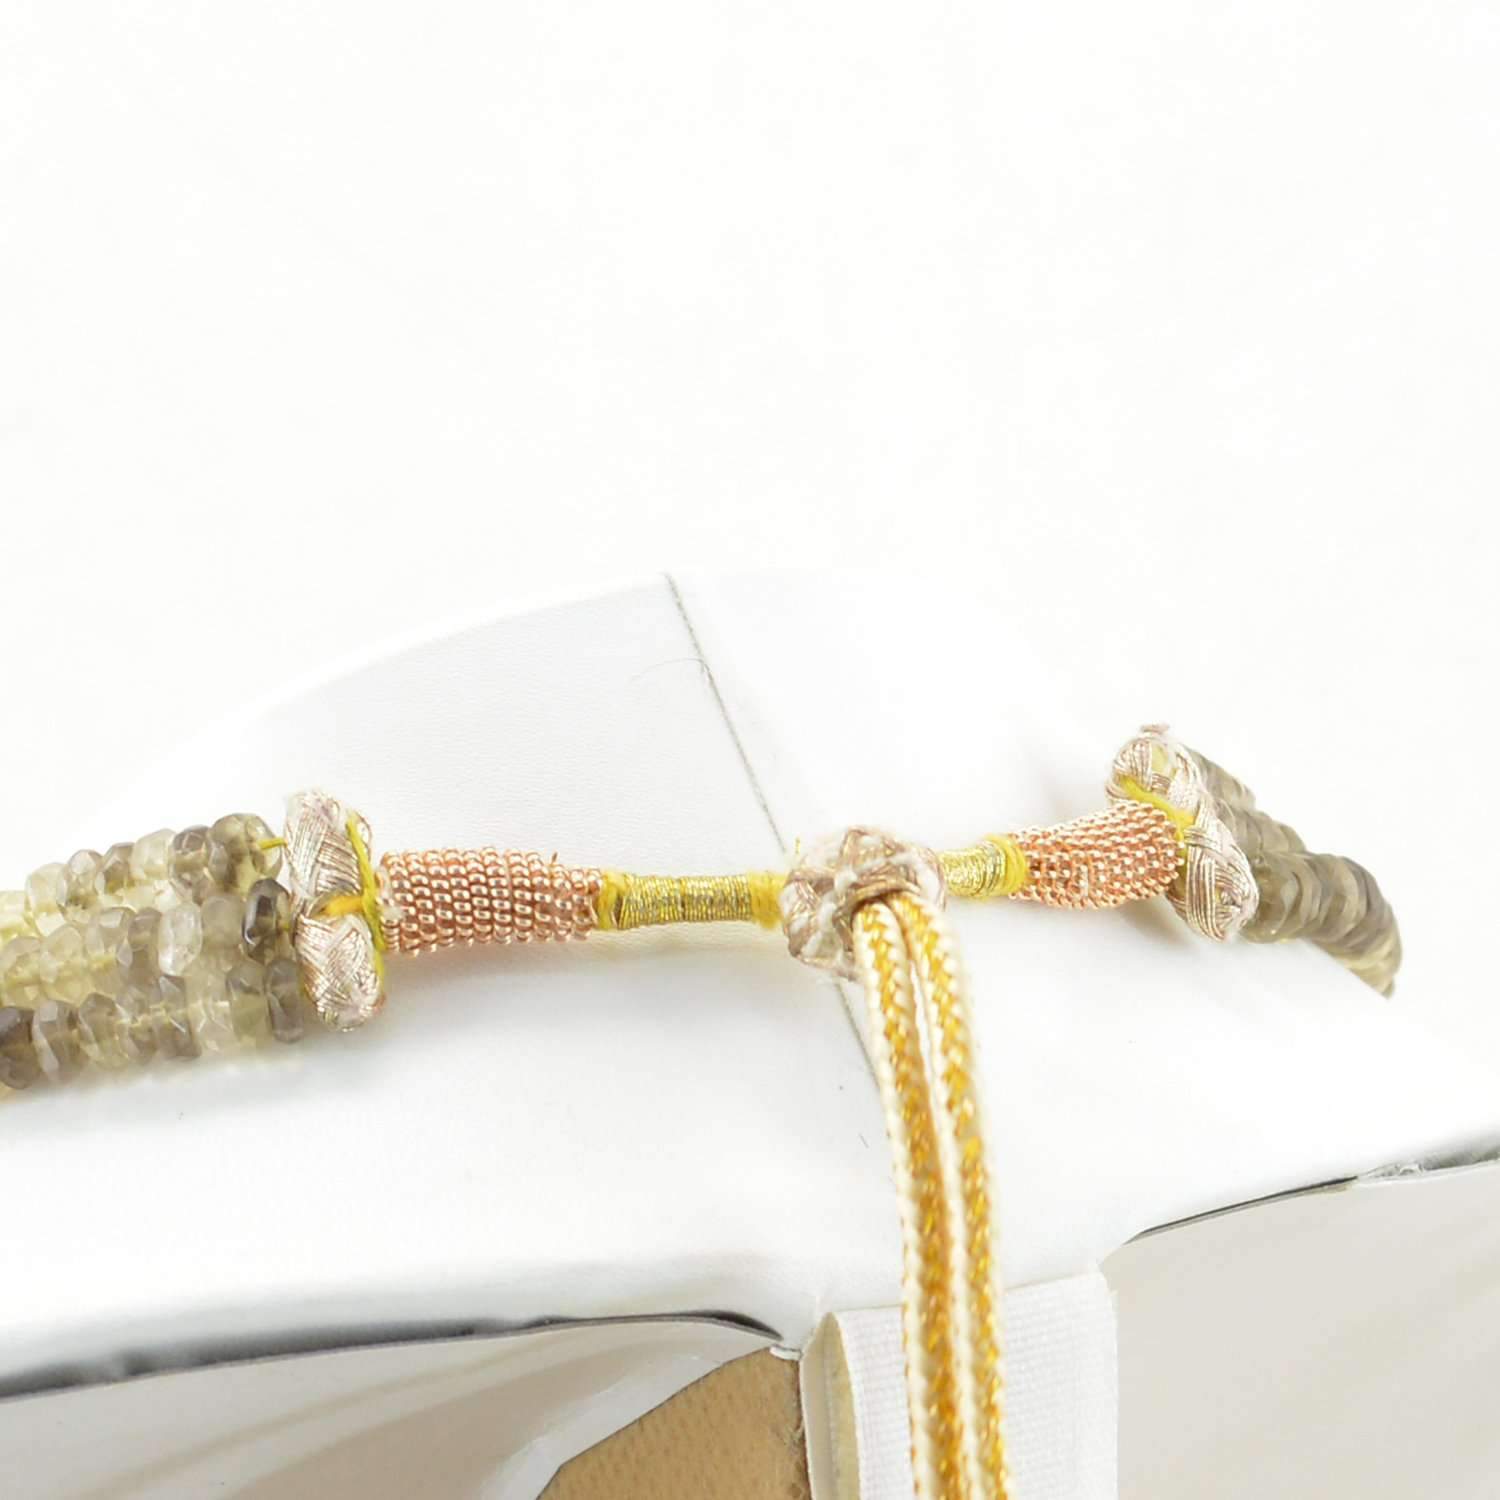 gemsmore:Rutile Quartz Necklace Natural 3 Strand Round Shape Faceted Beads